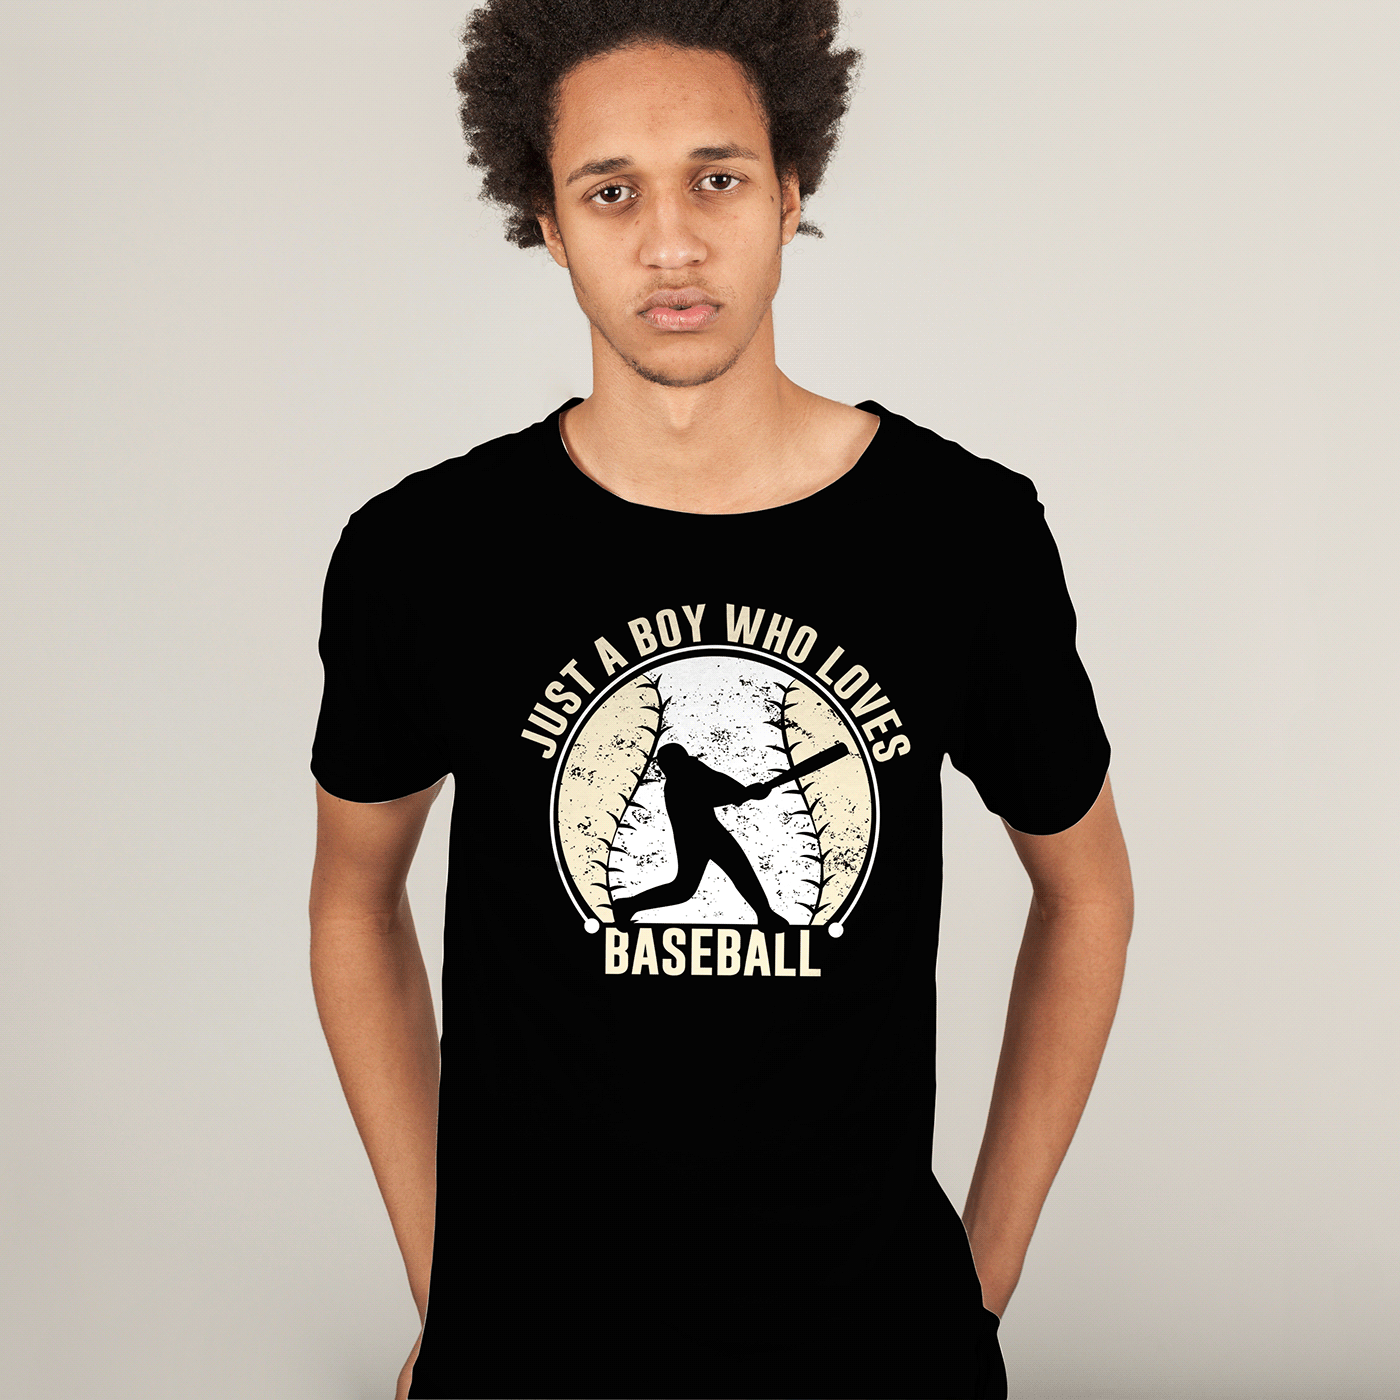 baseball sports design typography   T-Shirt Design Clothing Fashion  trendy graphic design  BASEBALL T SHIRT DESIGN